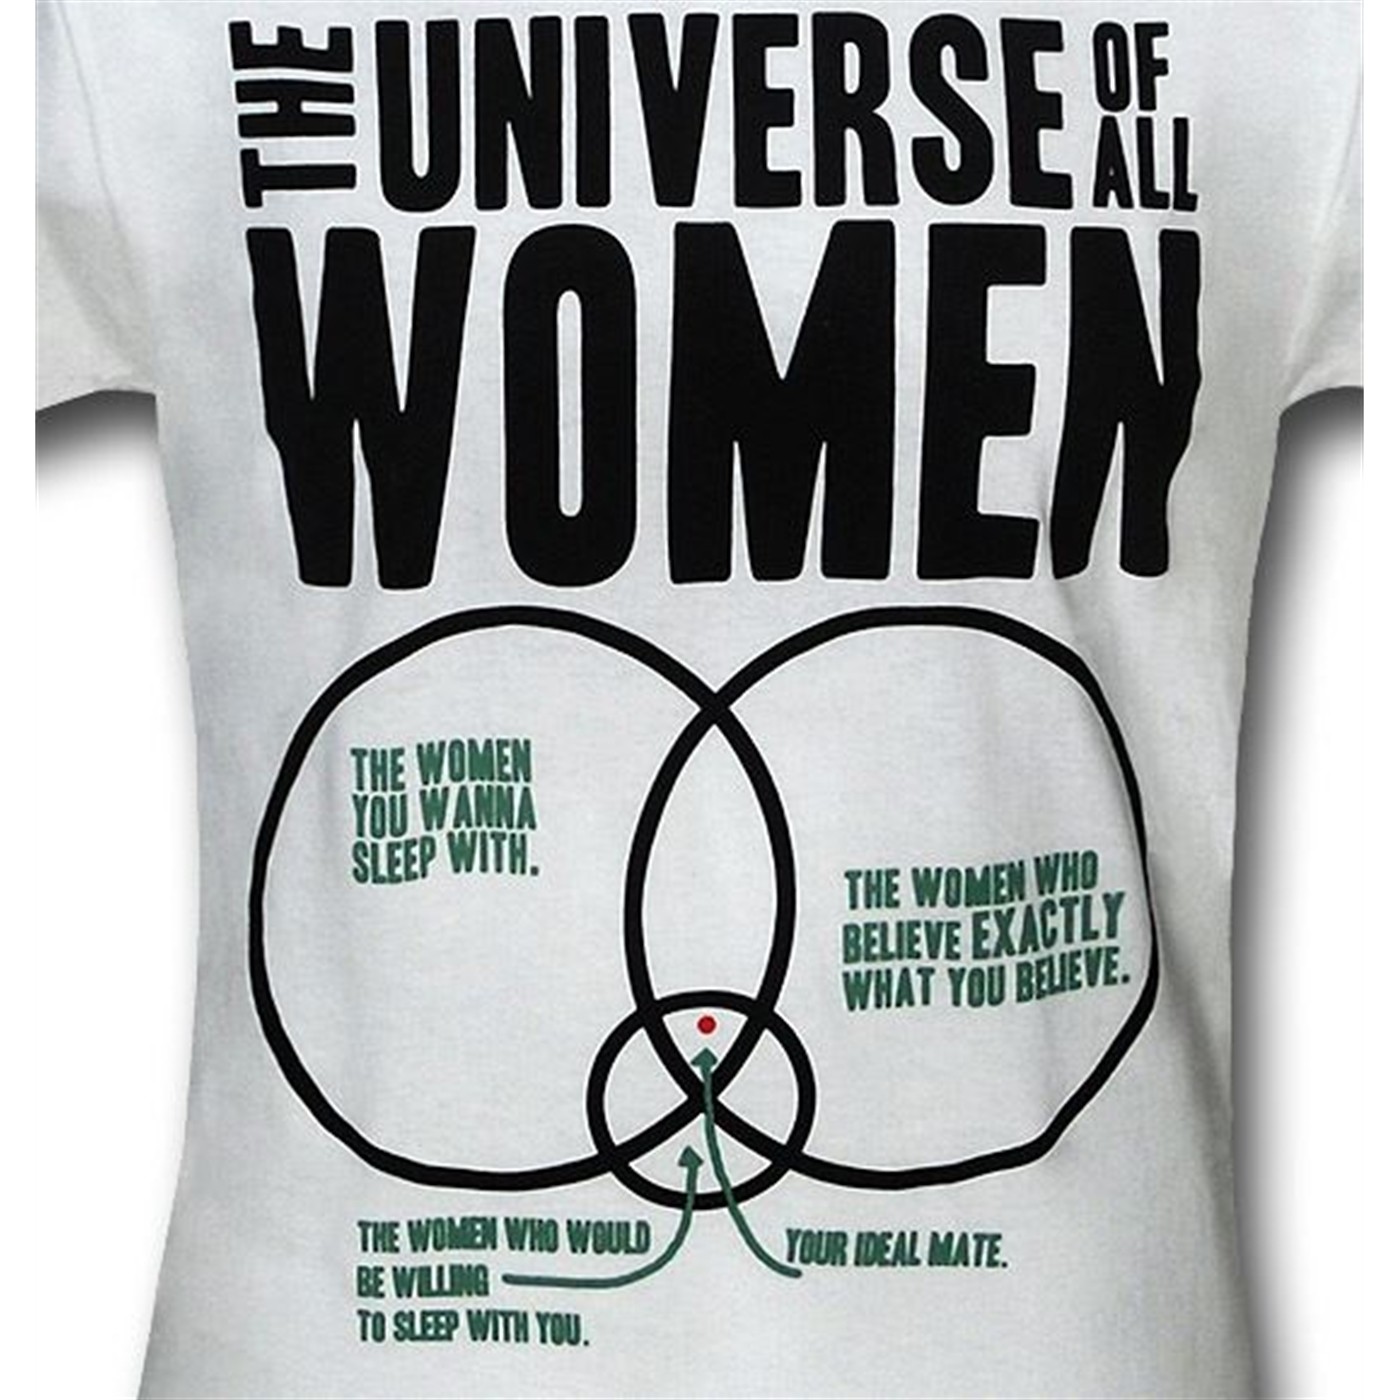 Big Bang Theory Universe of Women T-Shirt